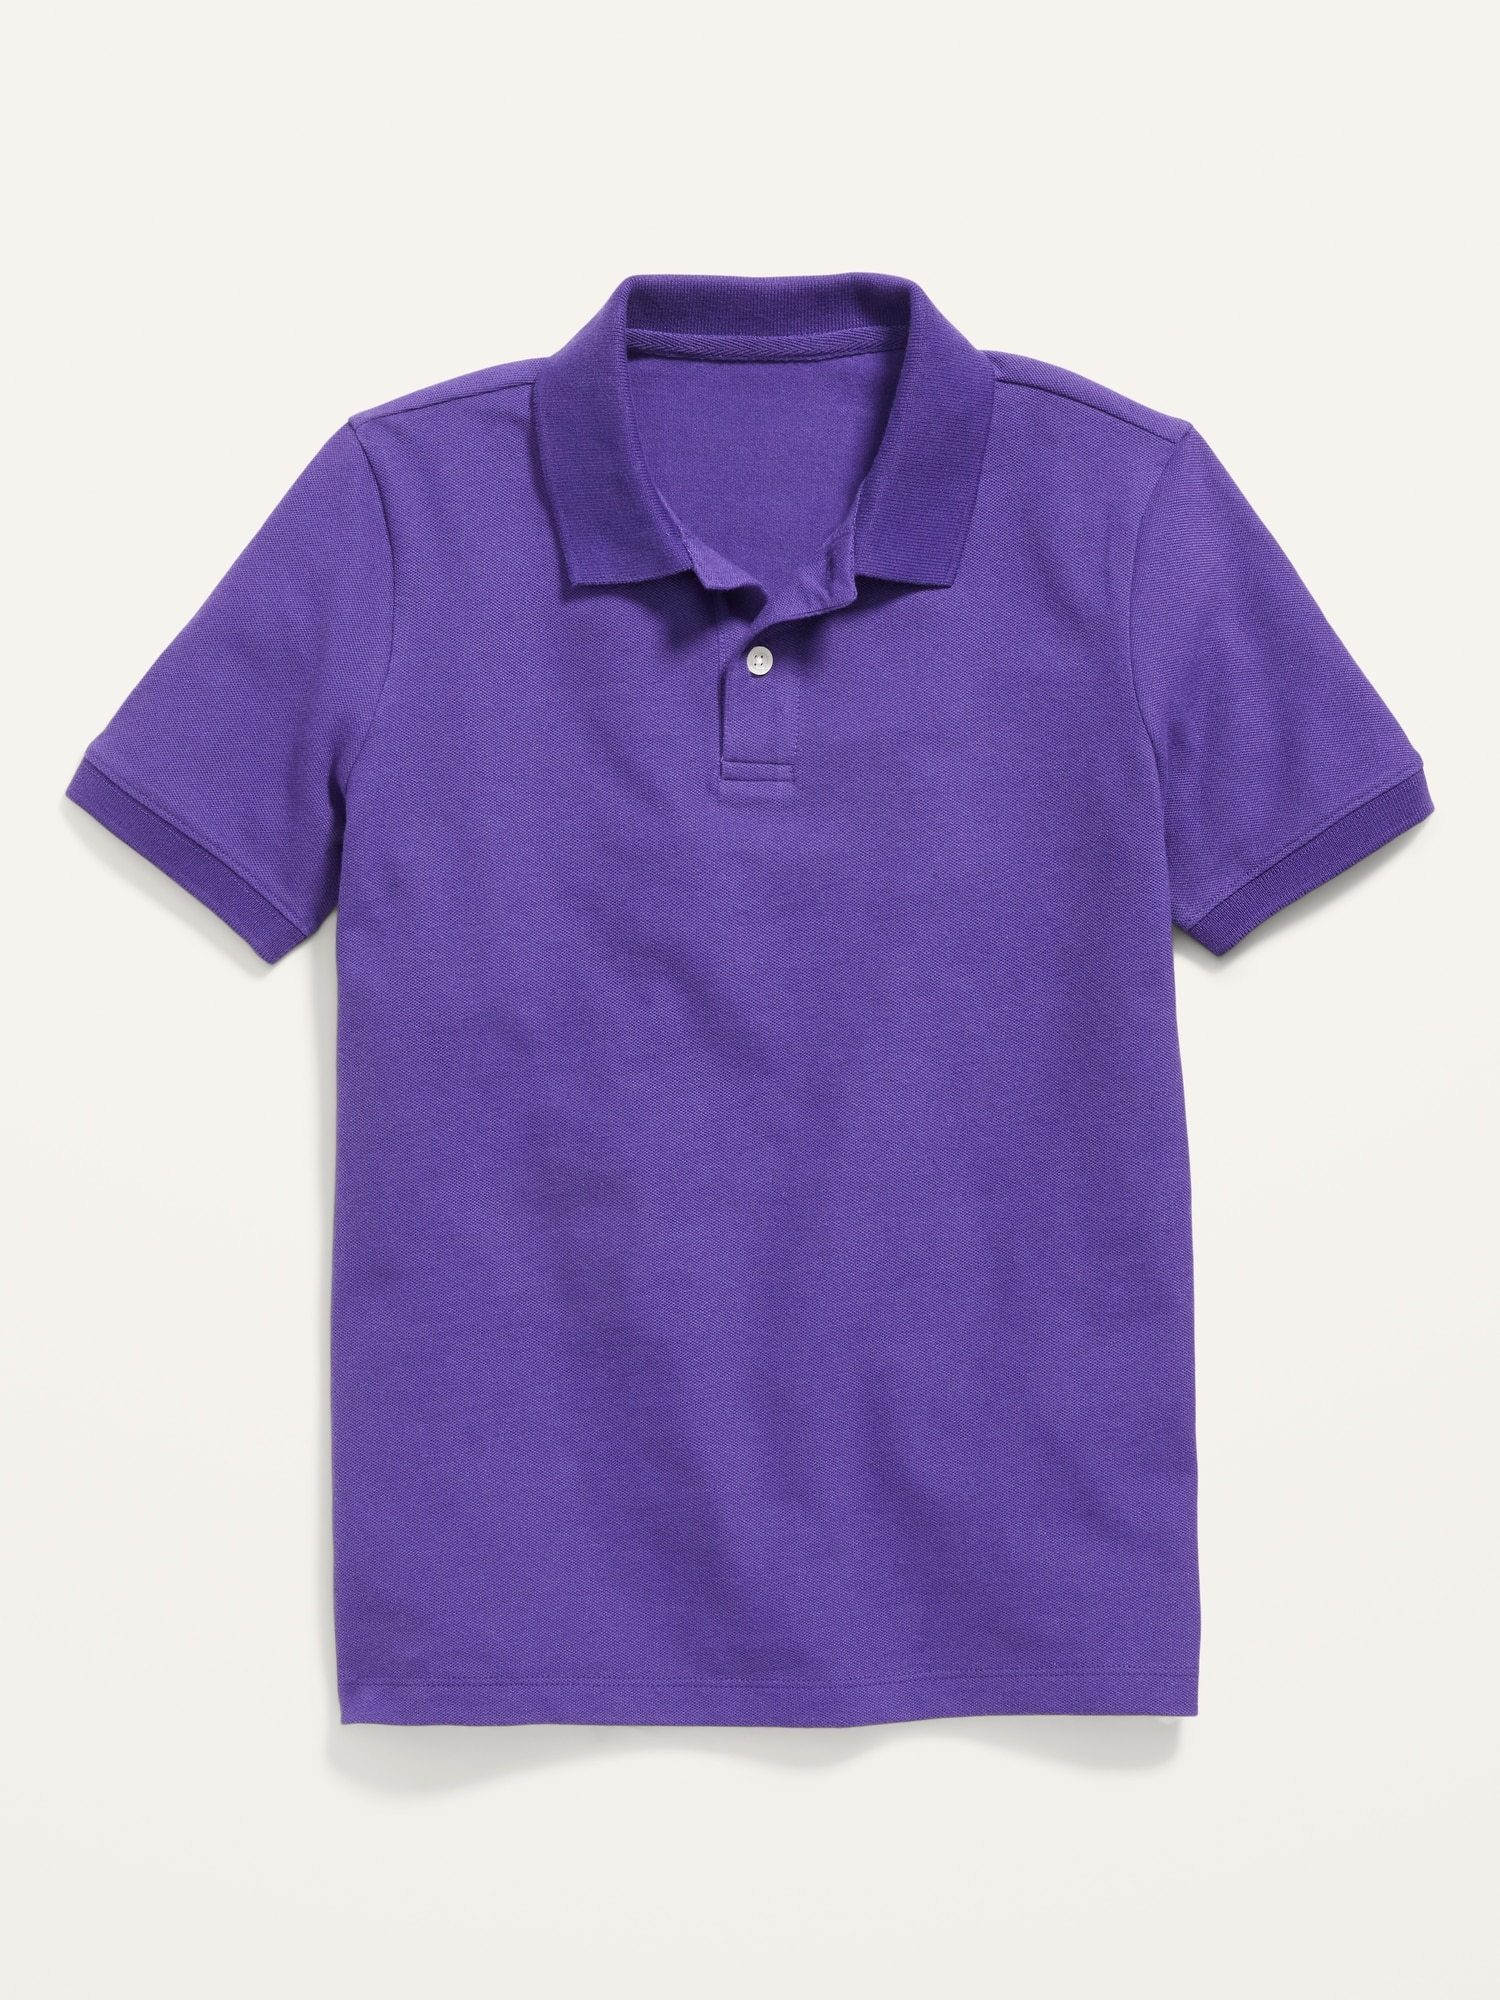 Old Navy School Uniform Pique Polo Shirt for Boys purple. 1